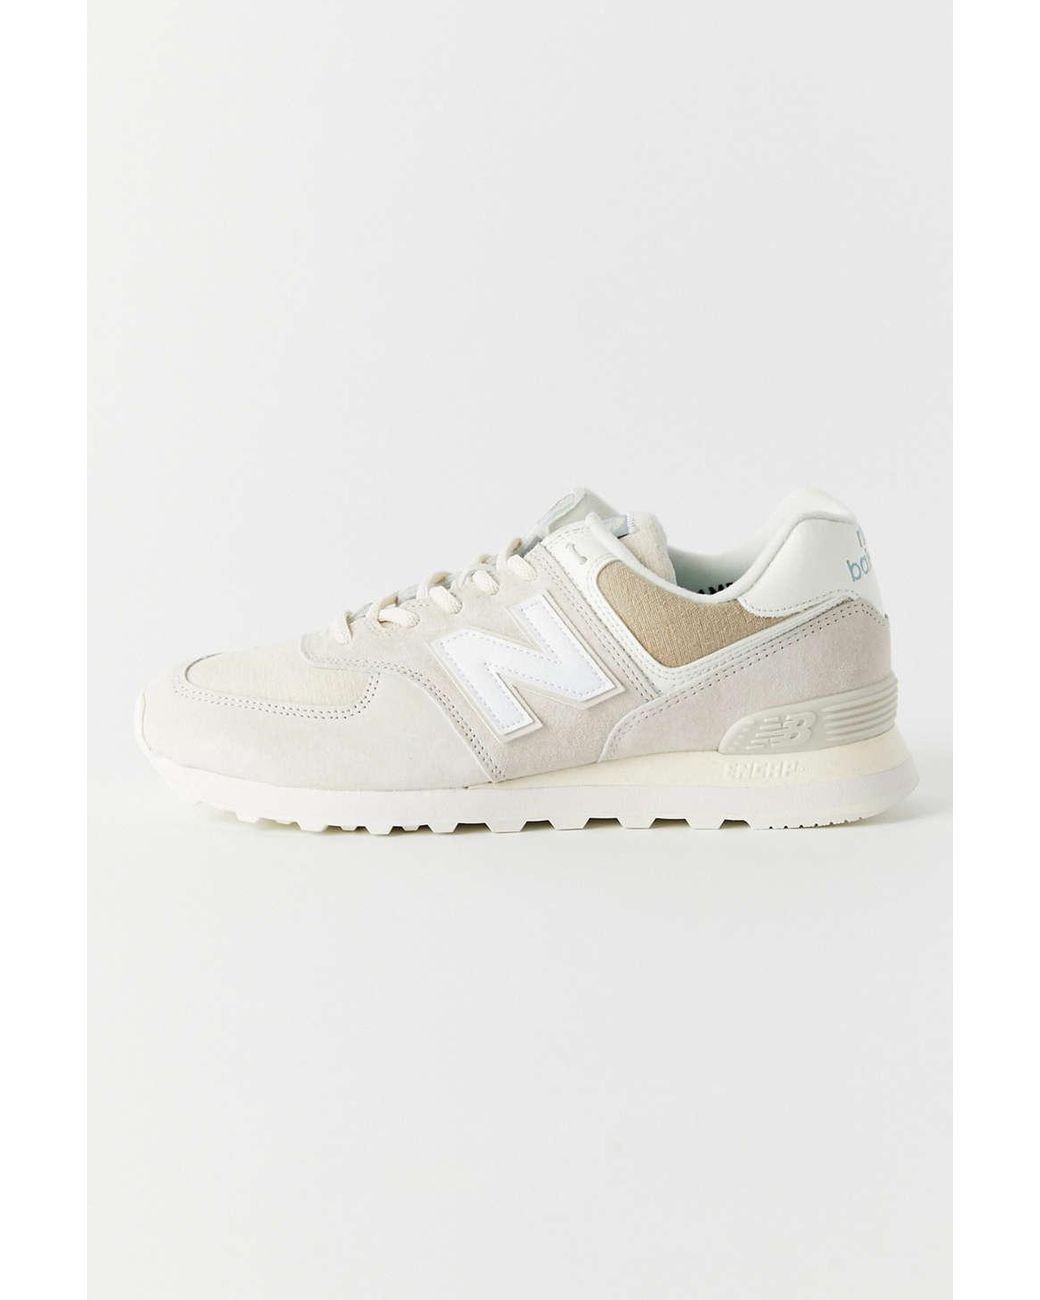 New Balance 574 Summer Sneaker in White | Lyst